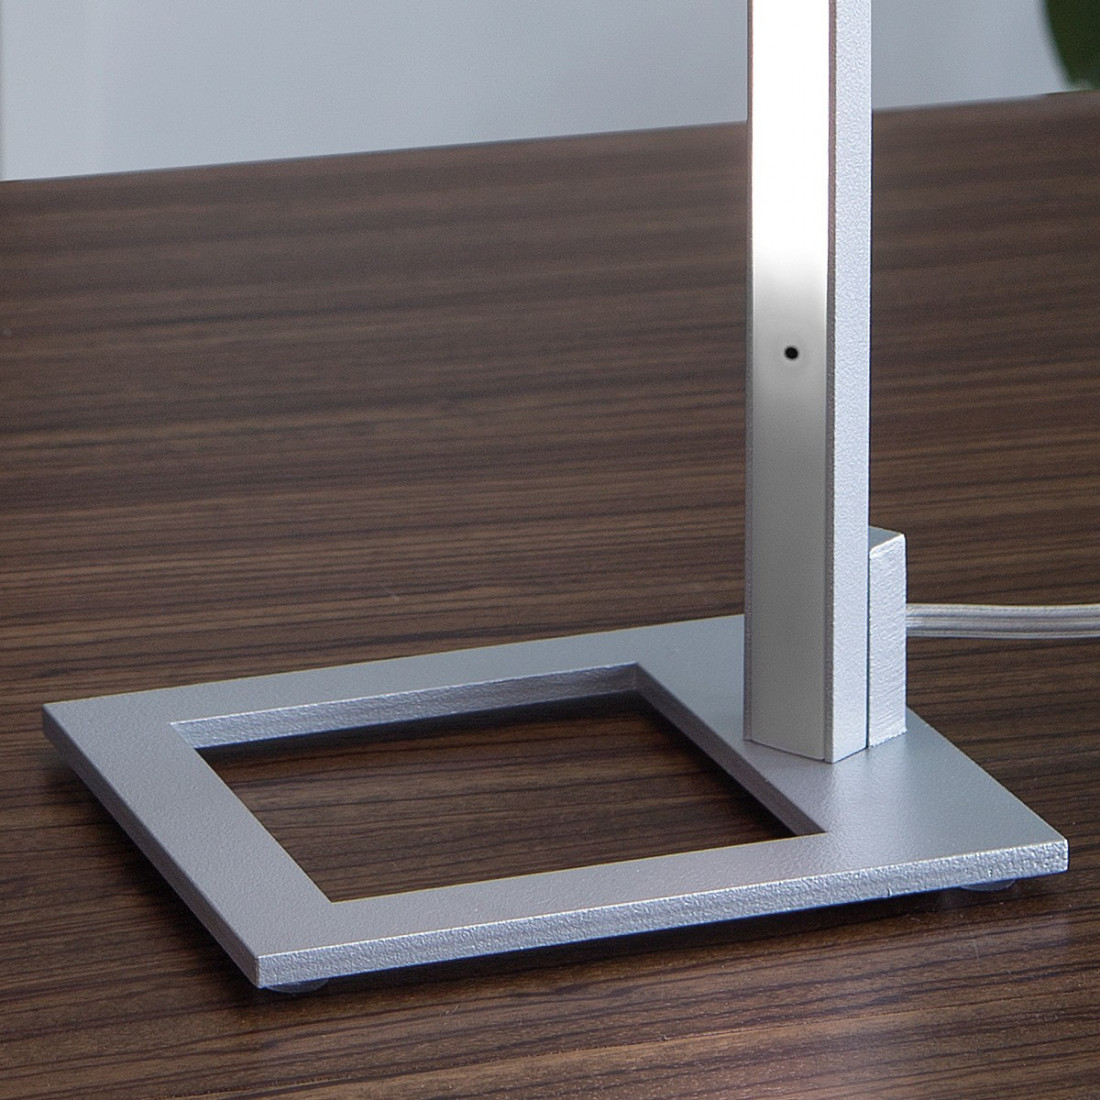 Abat-jour FB-SCIA 2127 L 5W LED 550 LM touch dimmer metallo lampada tavolo moderna ultramoderna interno